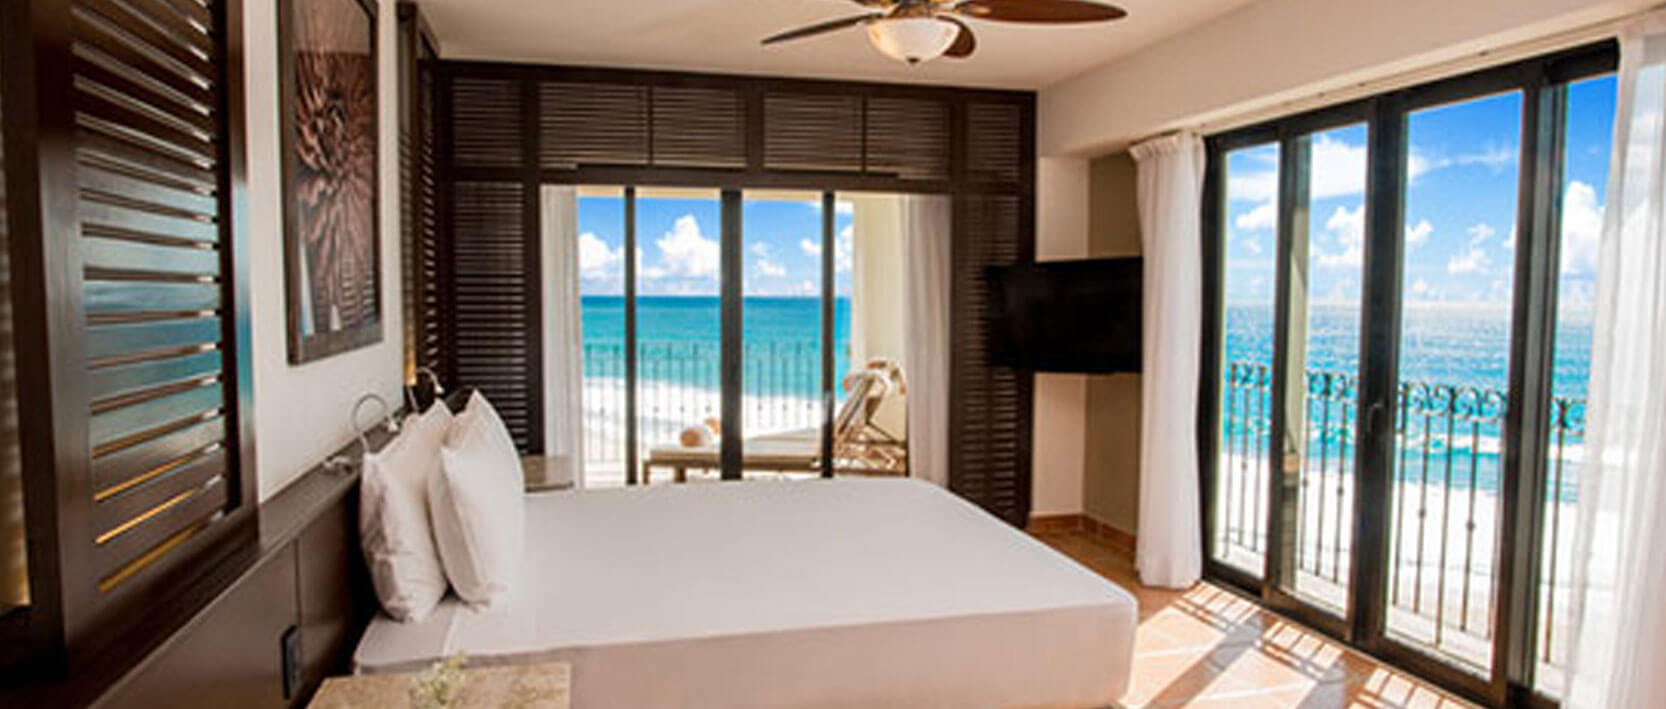 Hyatt Ziva Los Cabos Accommodations - Oceanfront Two Bedroom Grand Master Suite